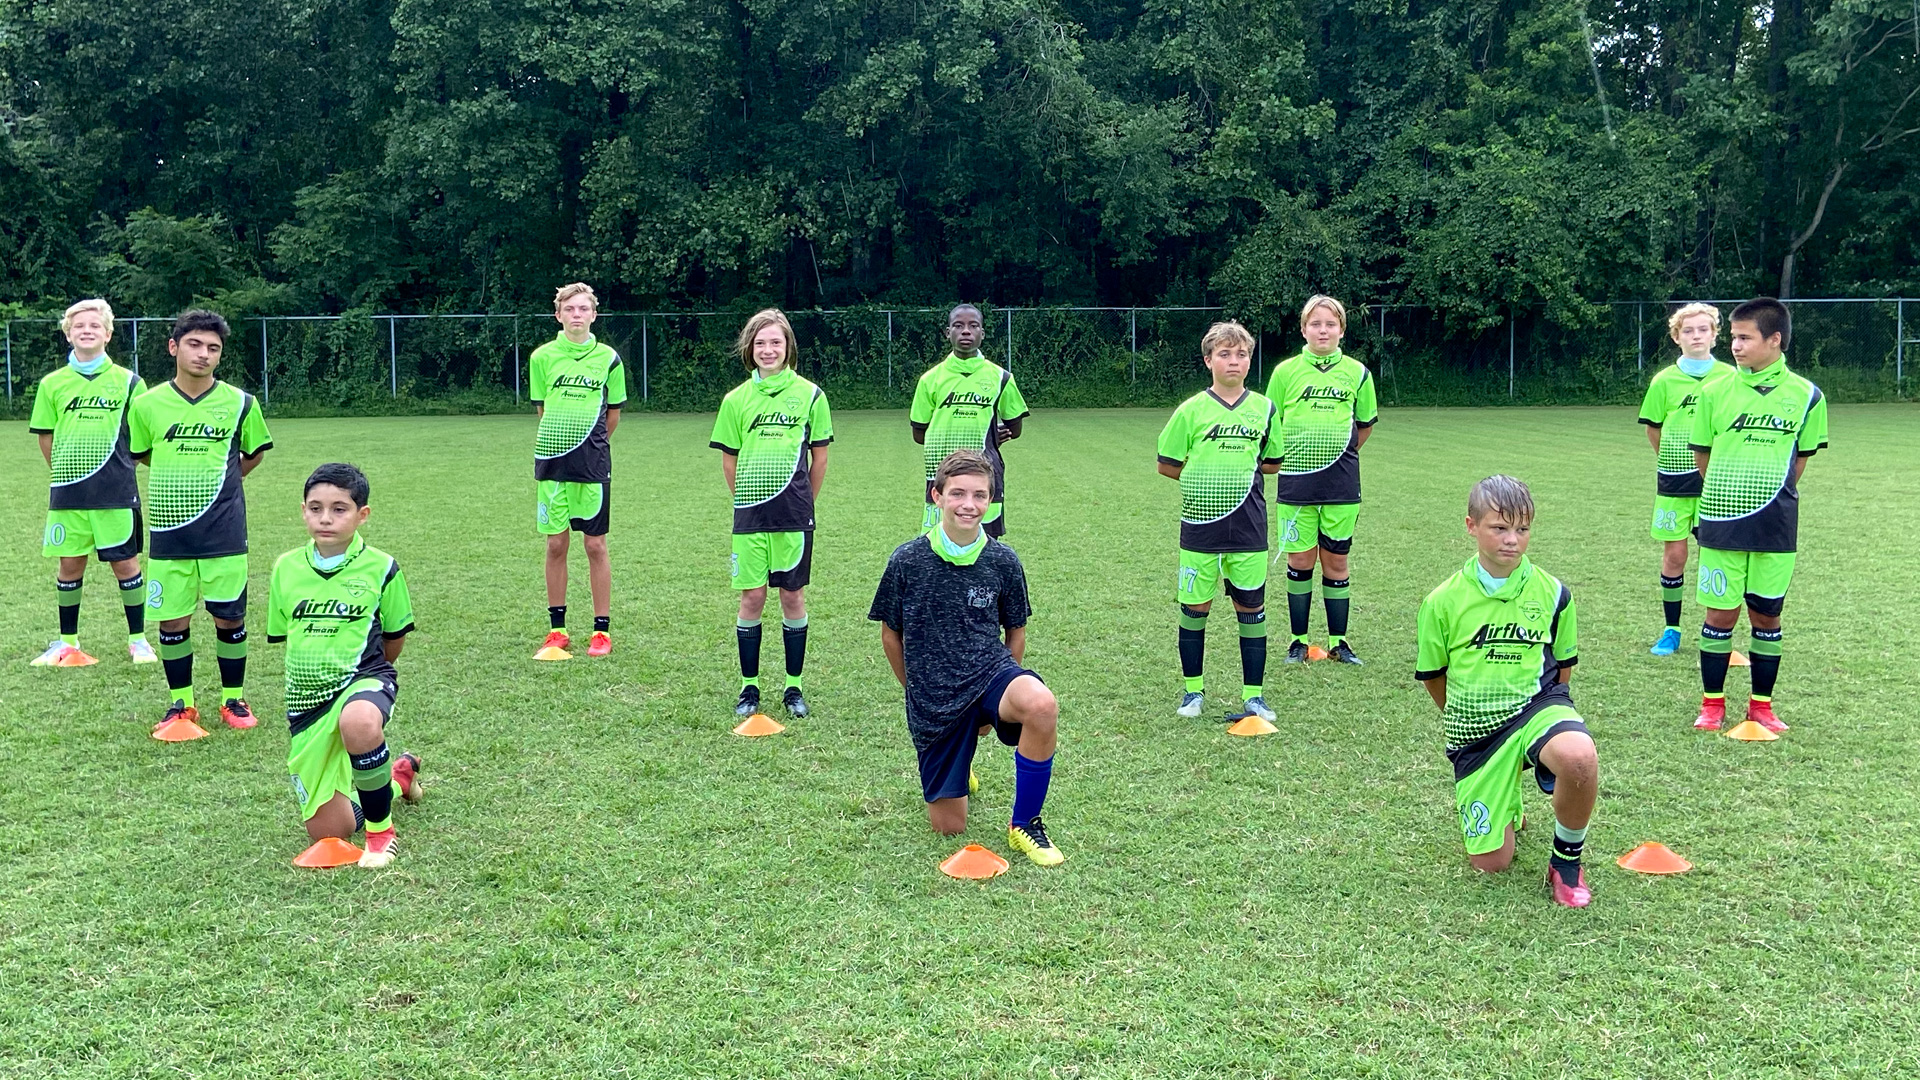 CVILLE UNITED | Youth Soccer Club | Charlottesville, Virginia | U15 Boys Team Photo